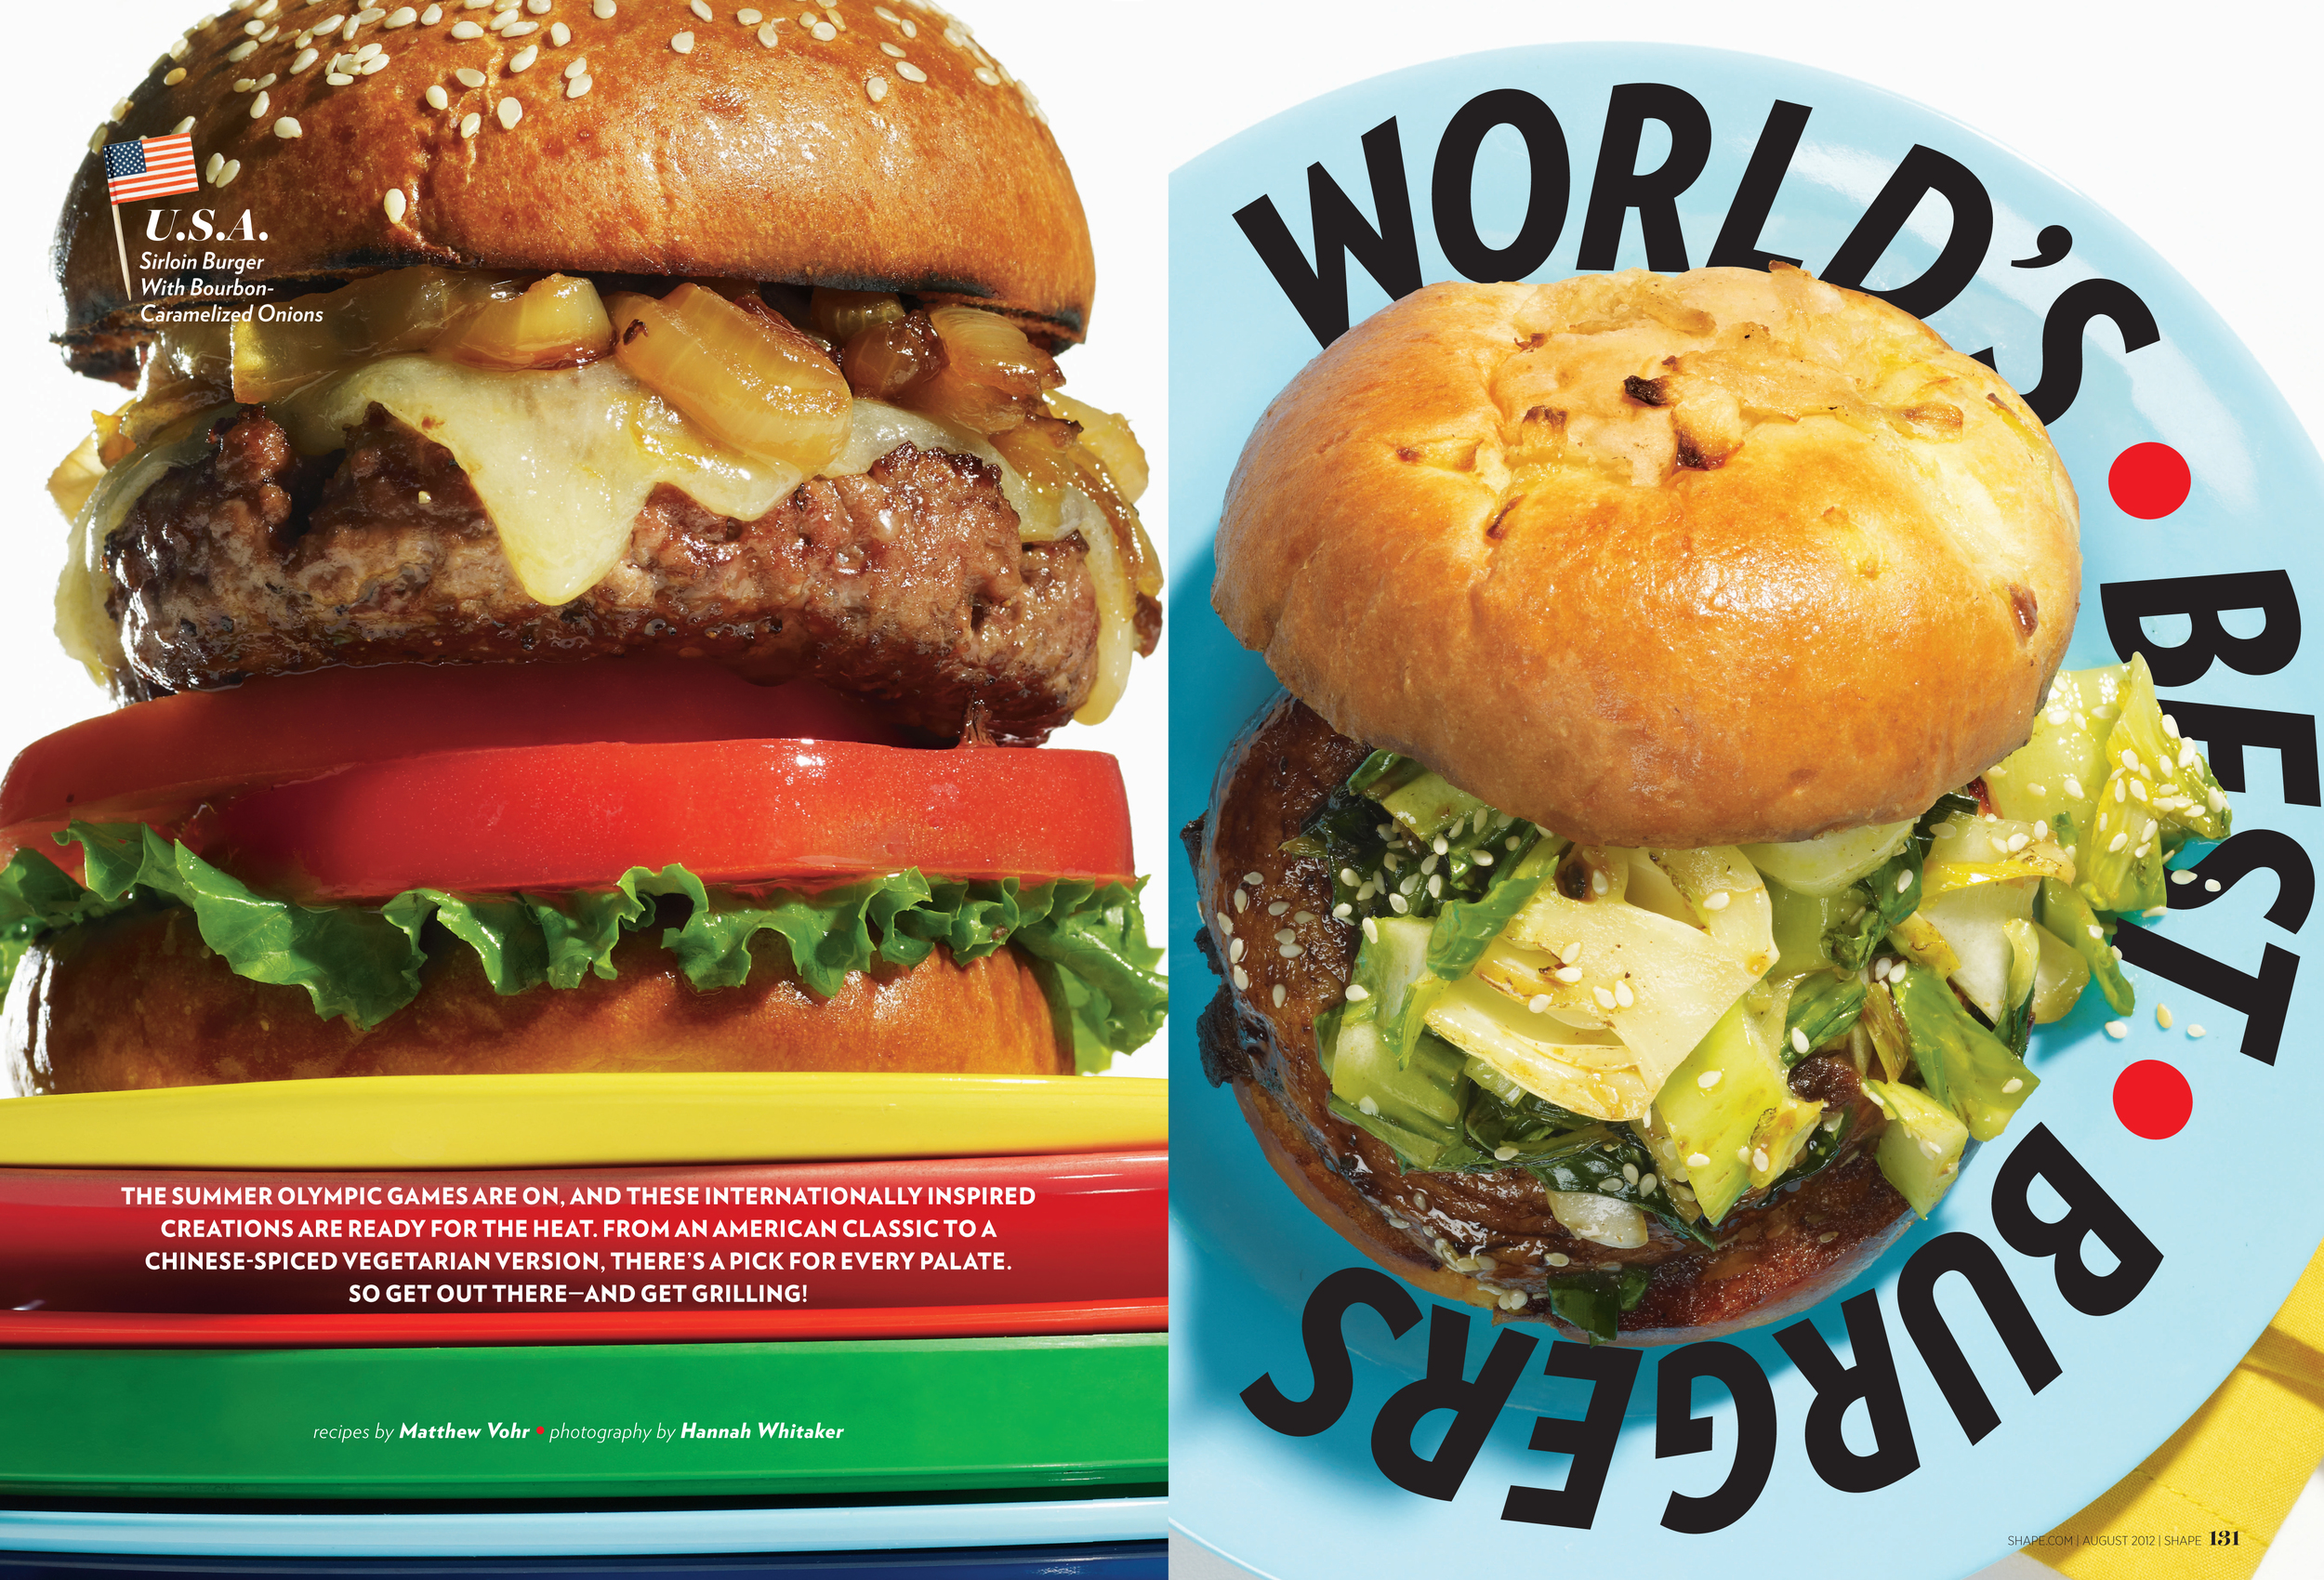 World's Best Burgers, August 2012